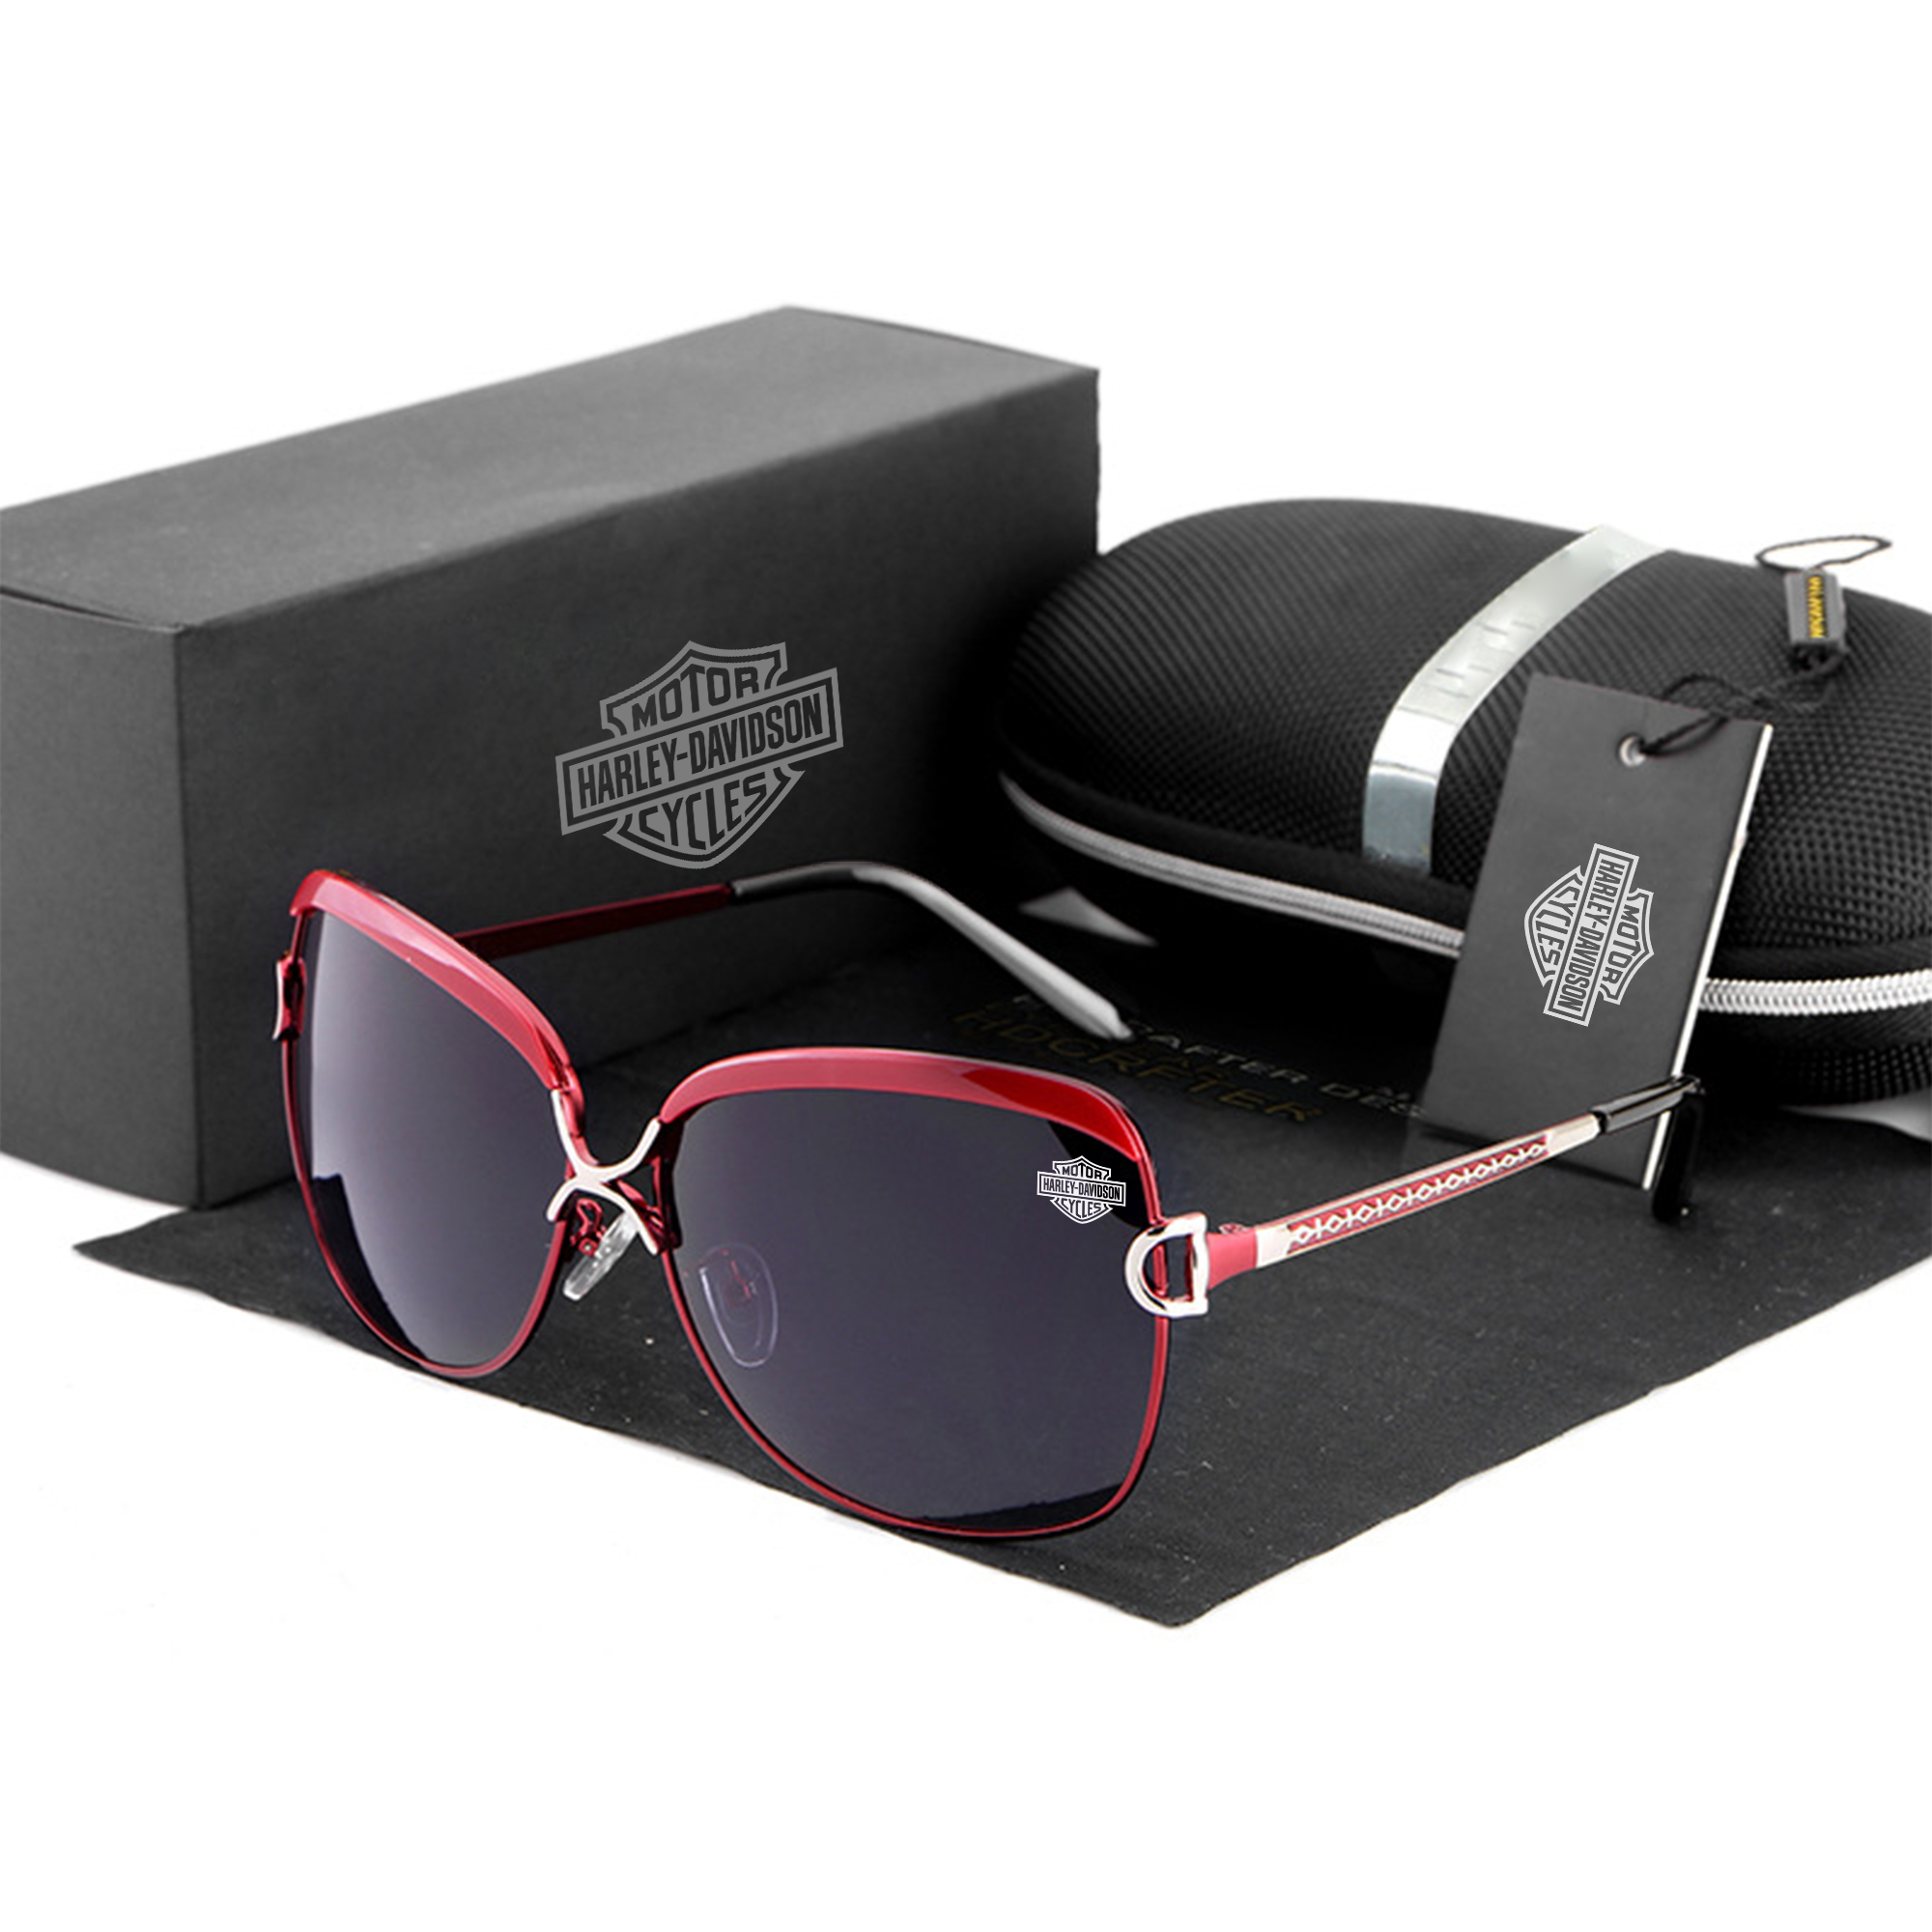 New Harley Davidson High Class Women’s Polarized Glasses